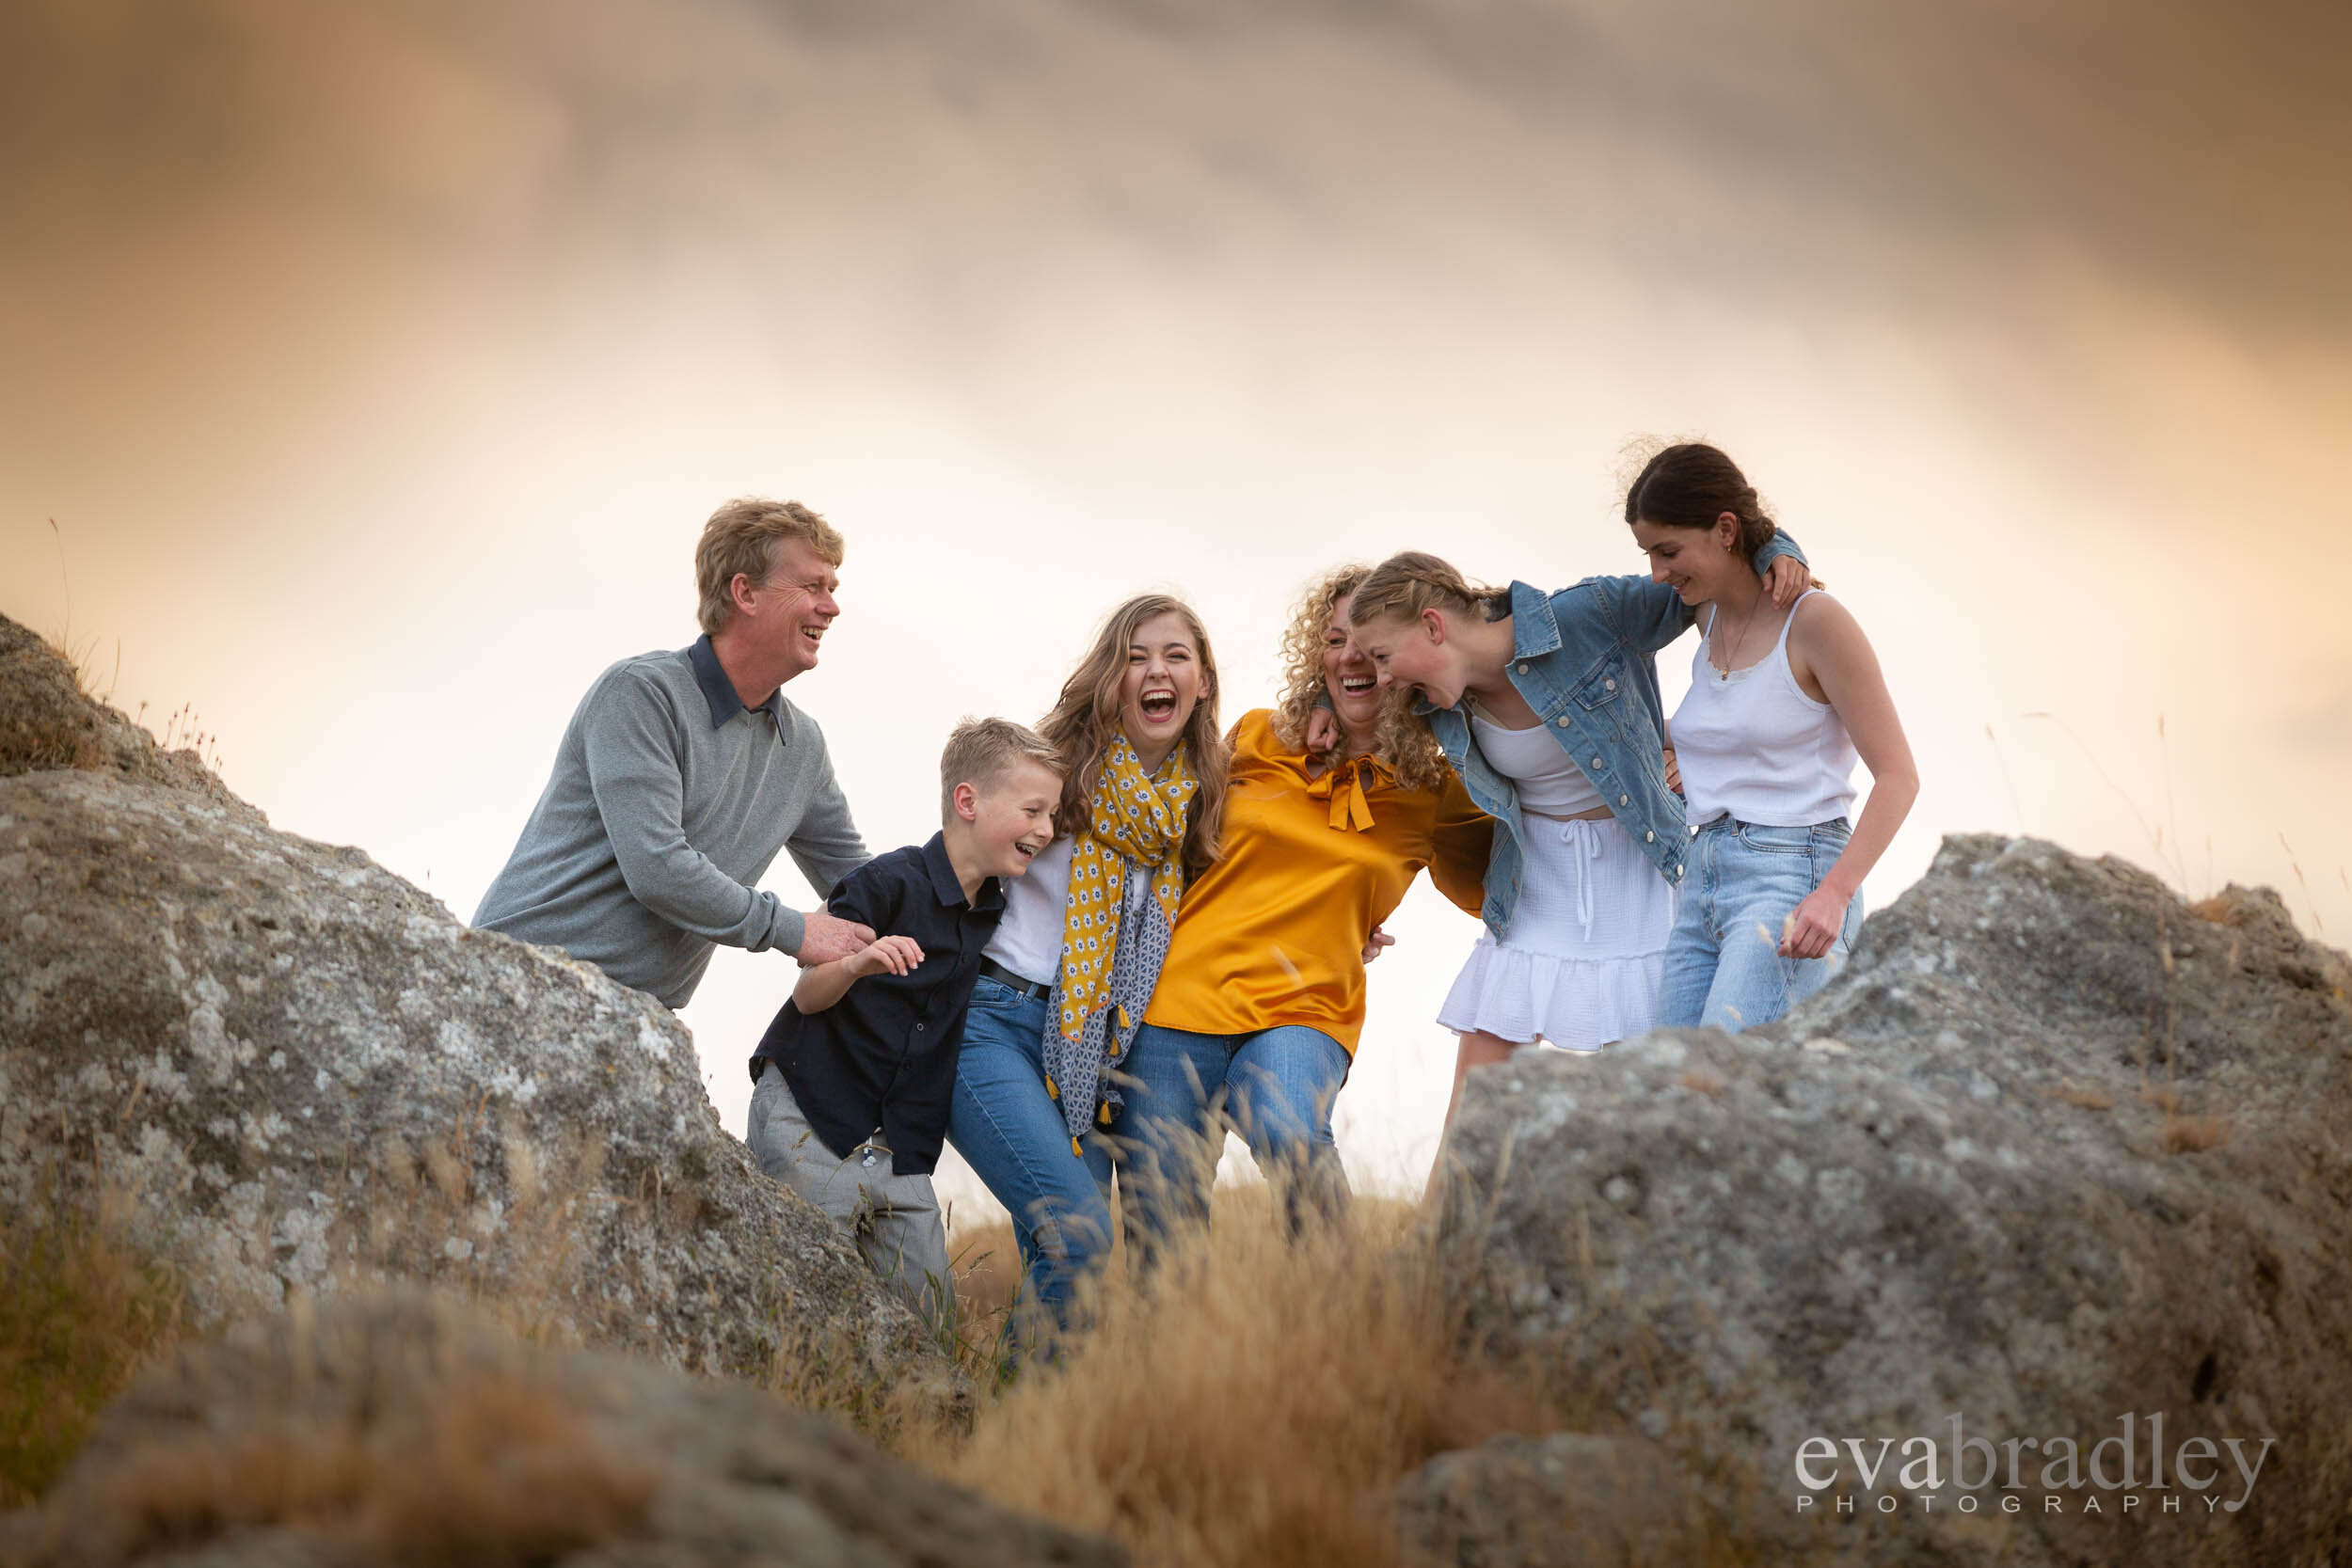 Eva Bradley family portrait photography